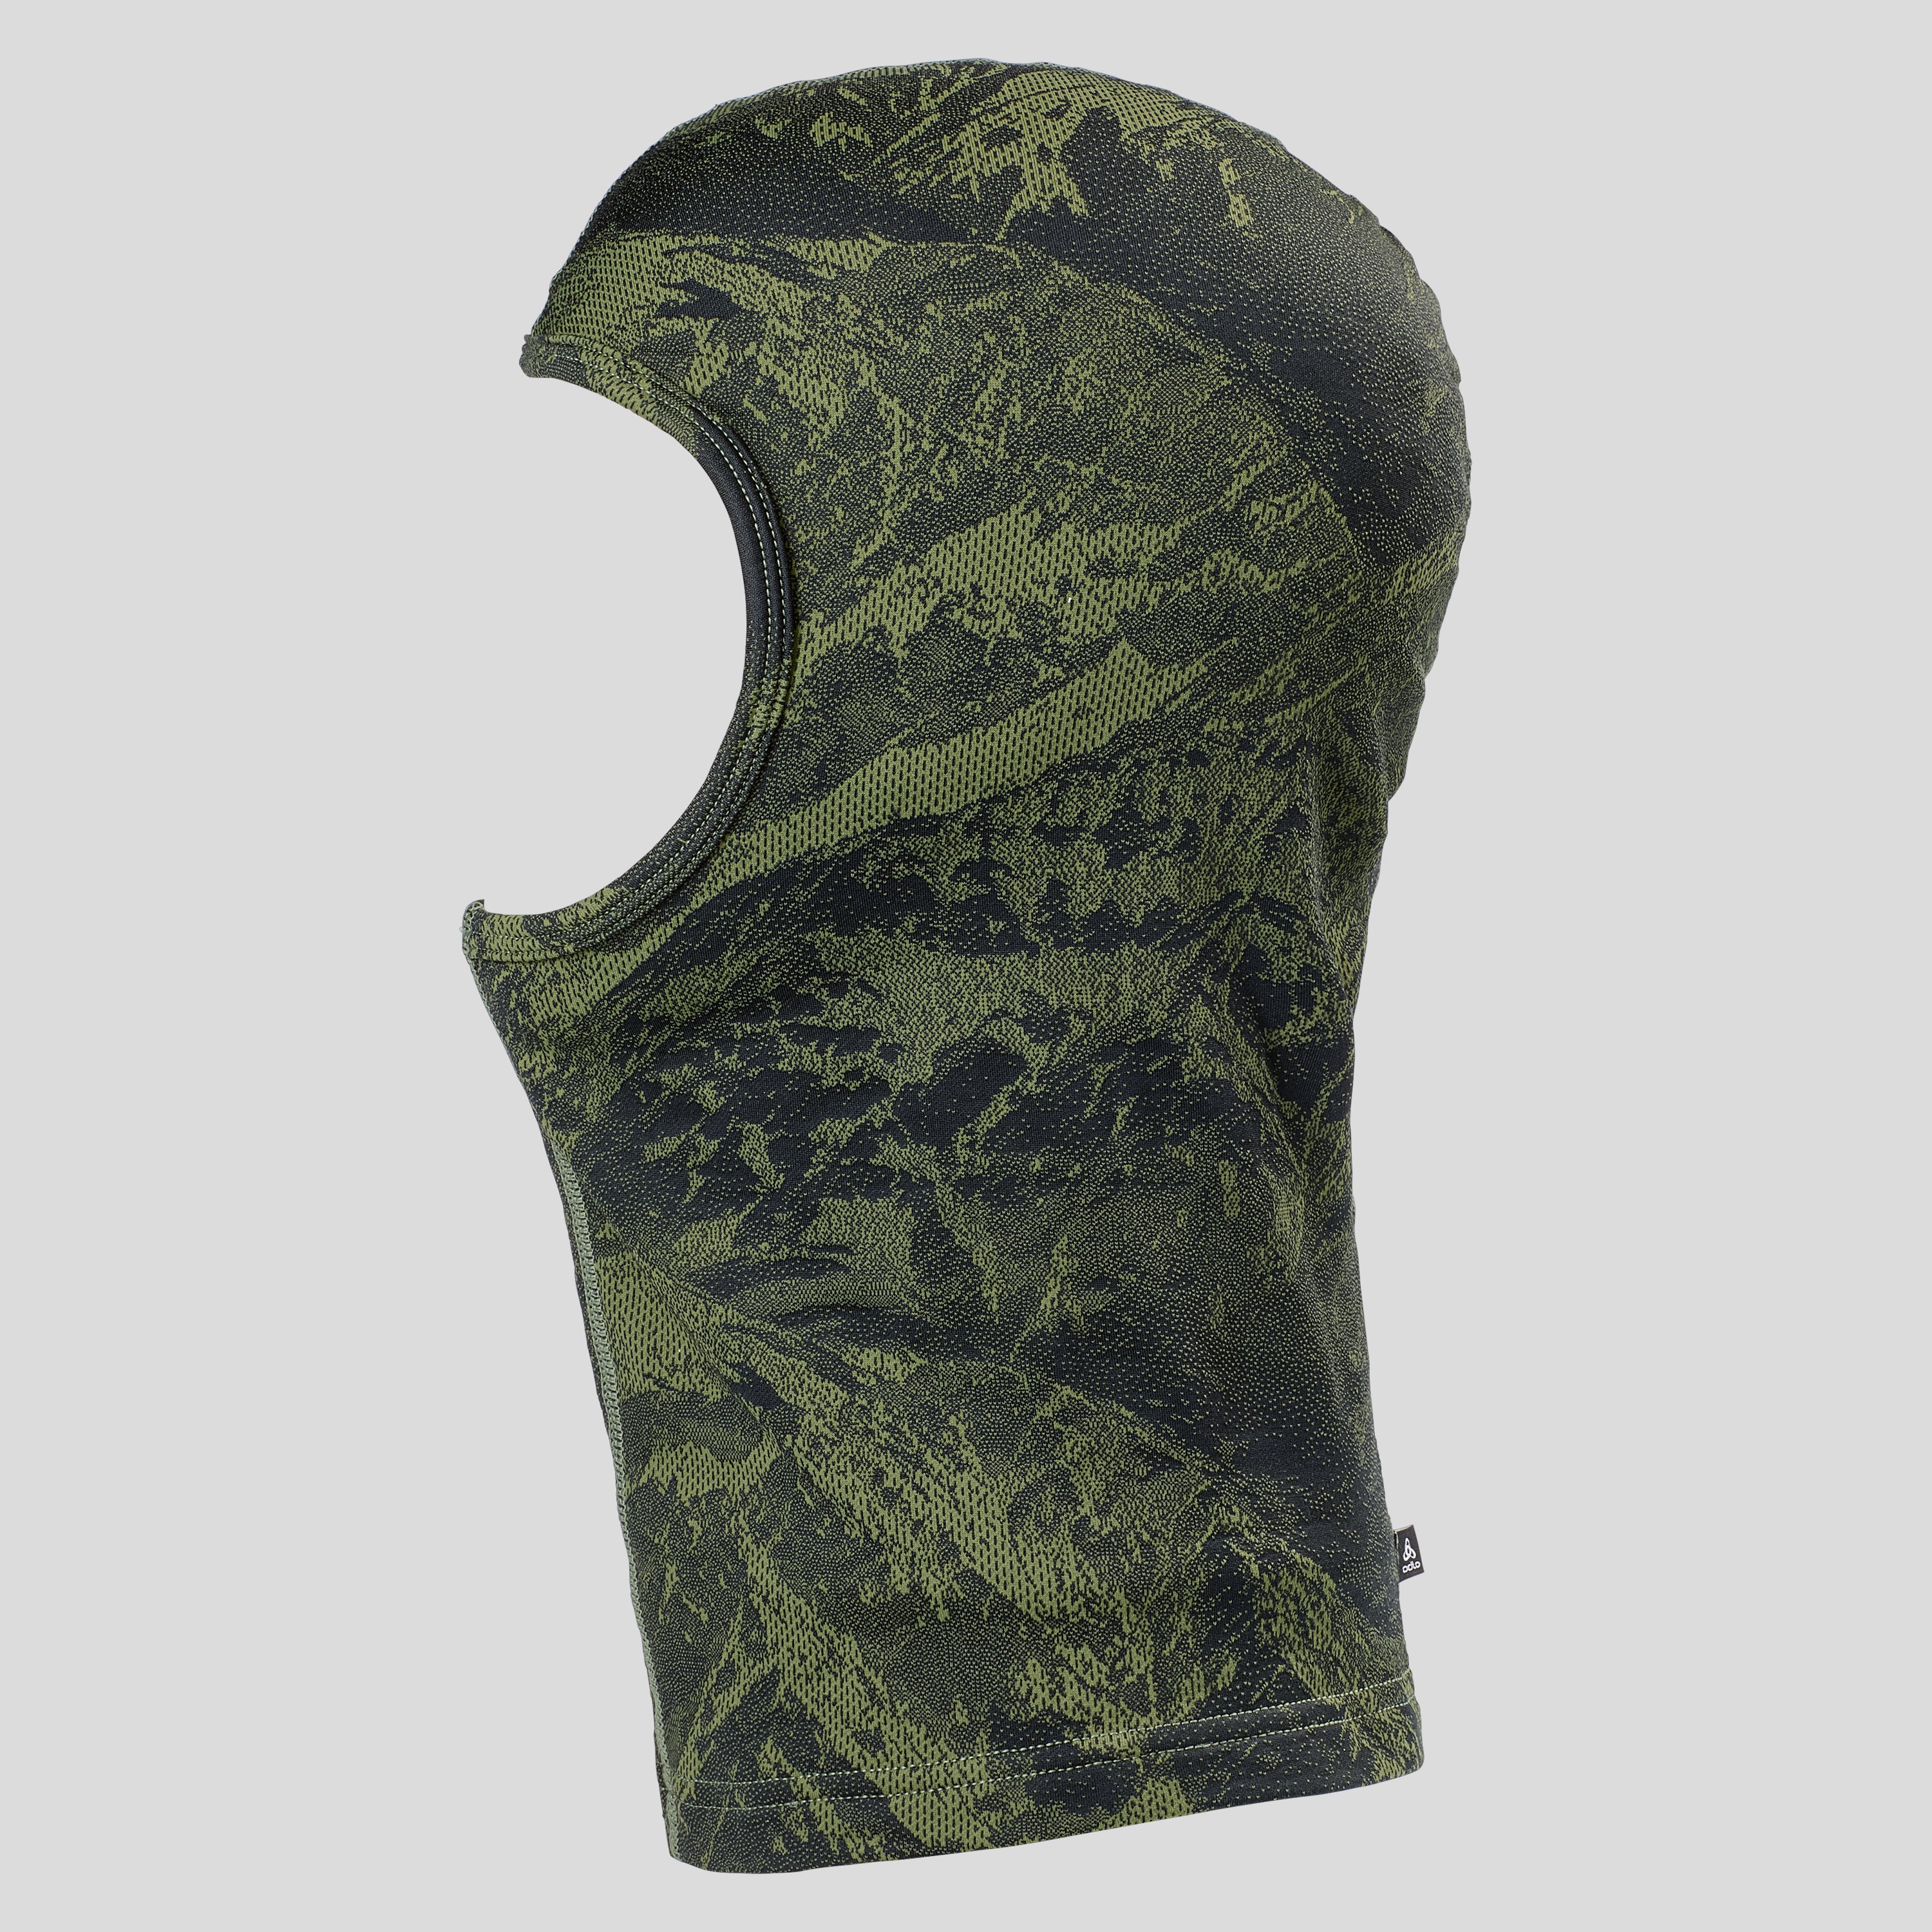 ODLO Whistler Maske mit Bergprint, S/M, grün